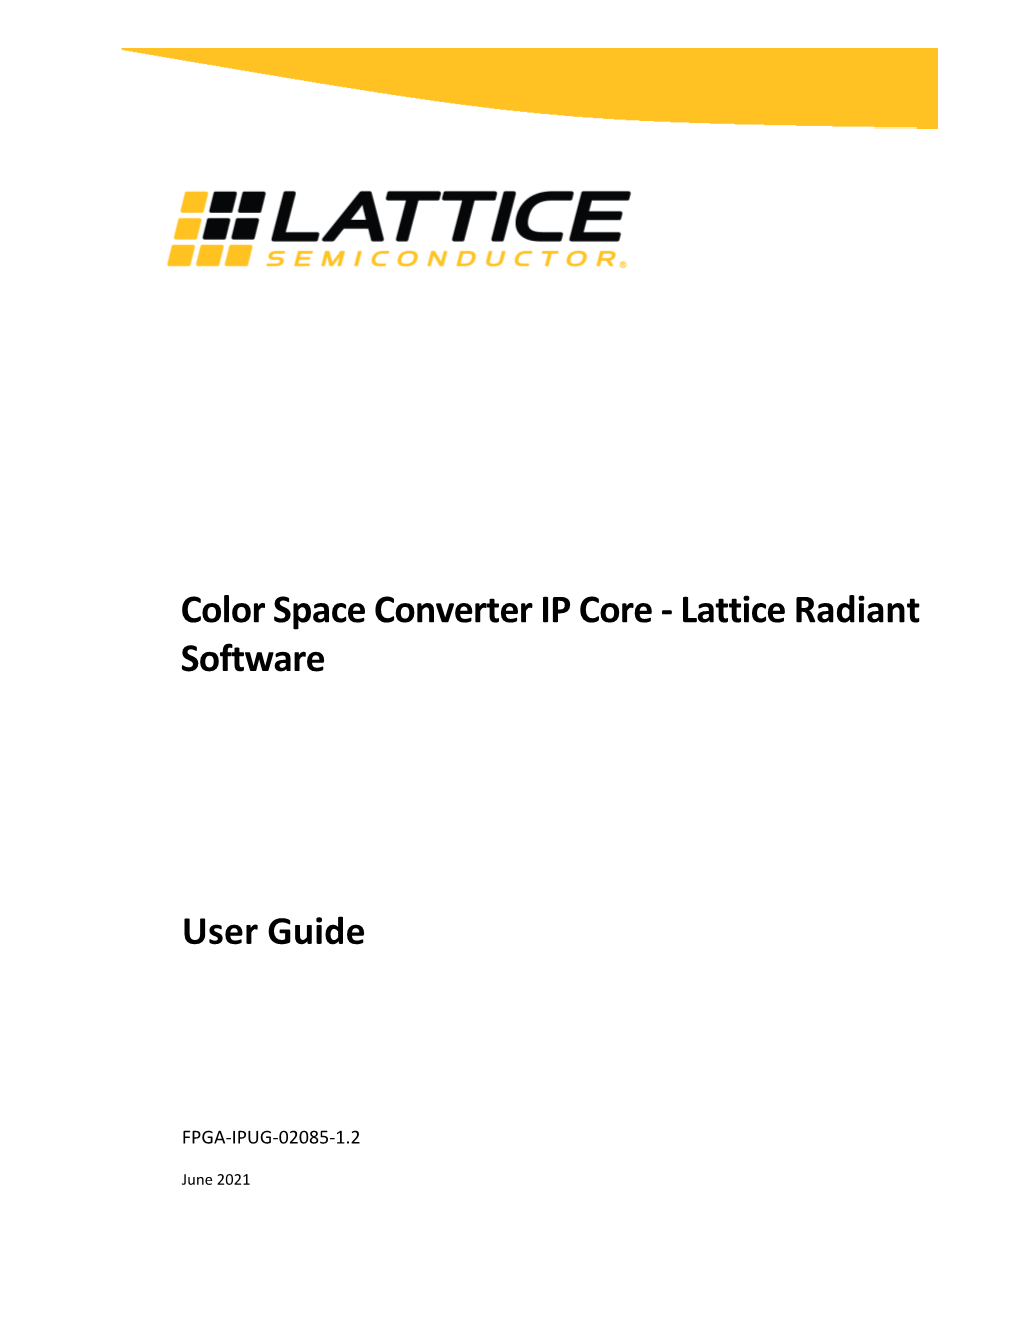 Color Space Converter IP Core - Lattice Radiant Software